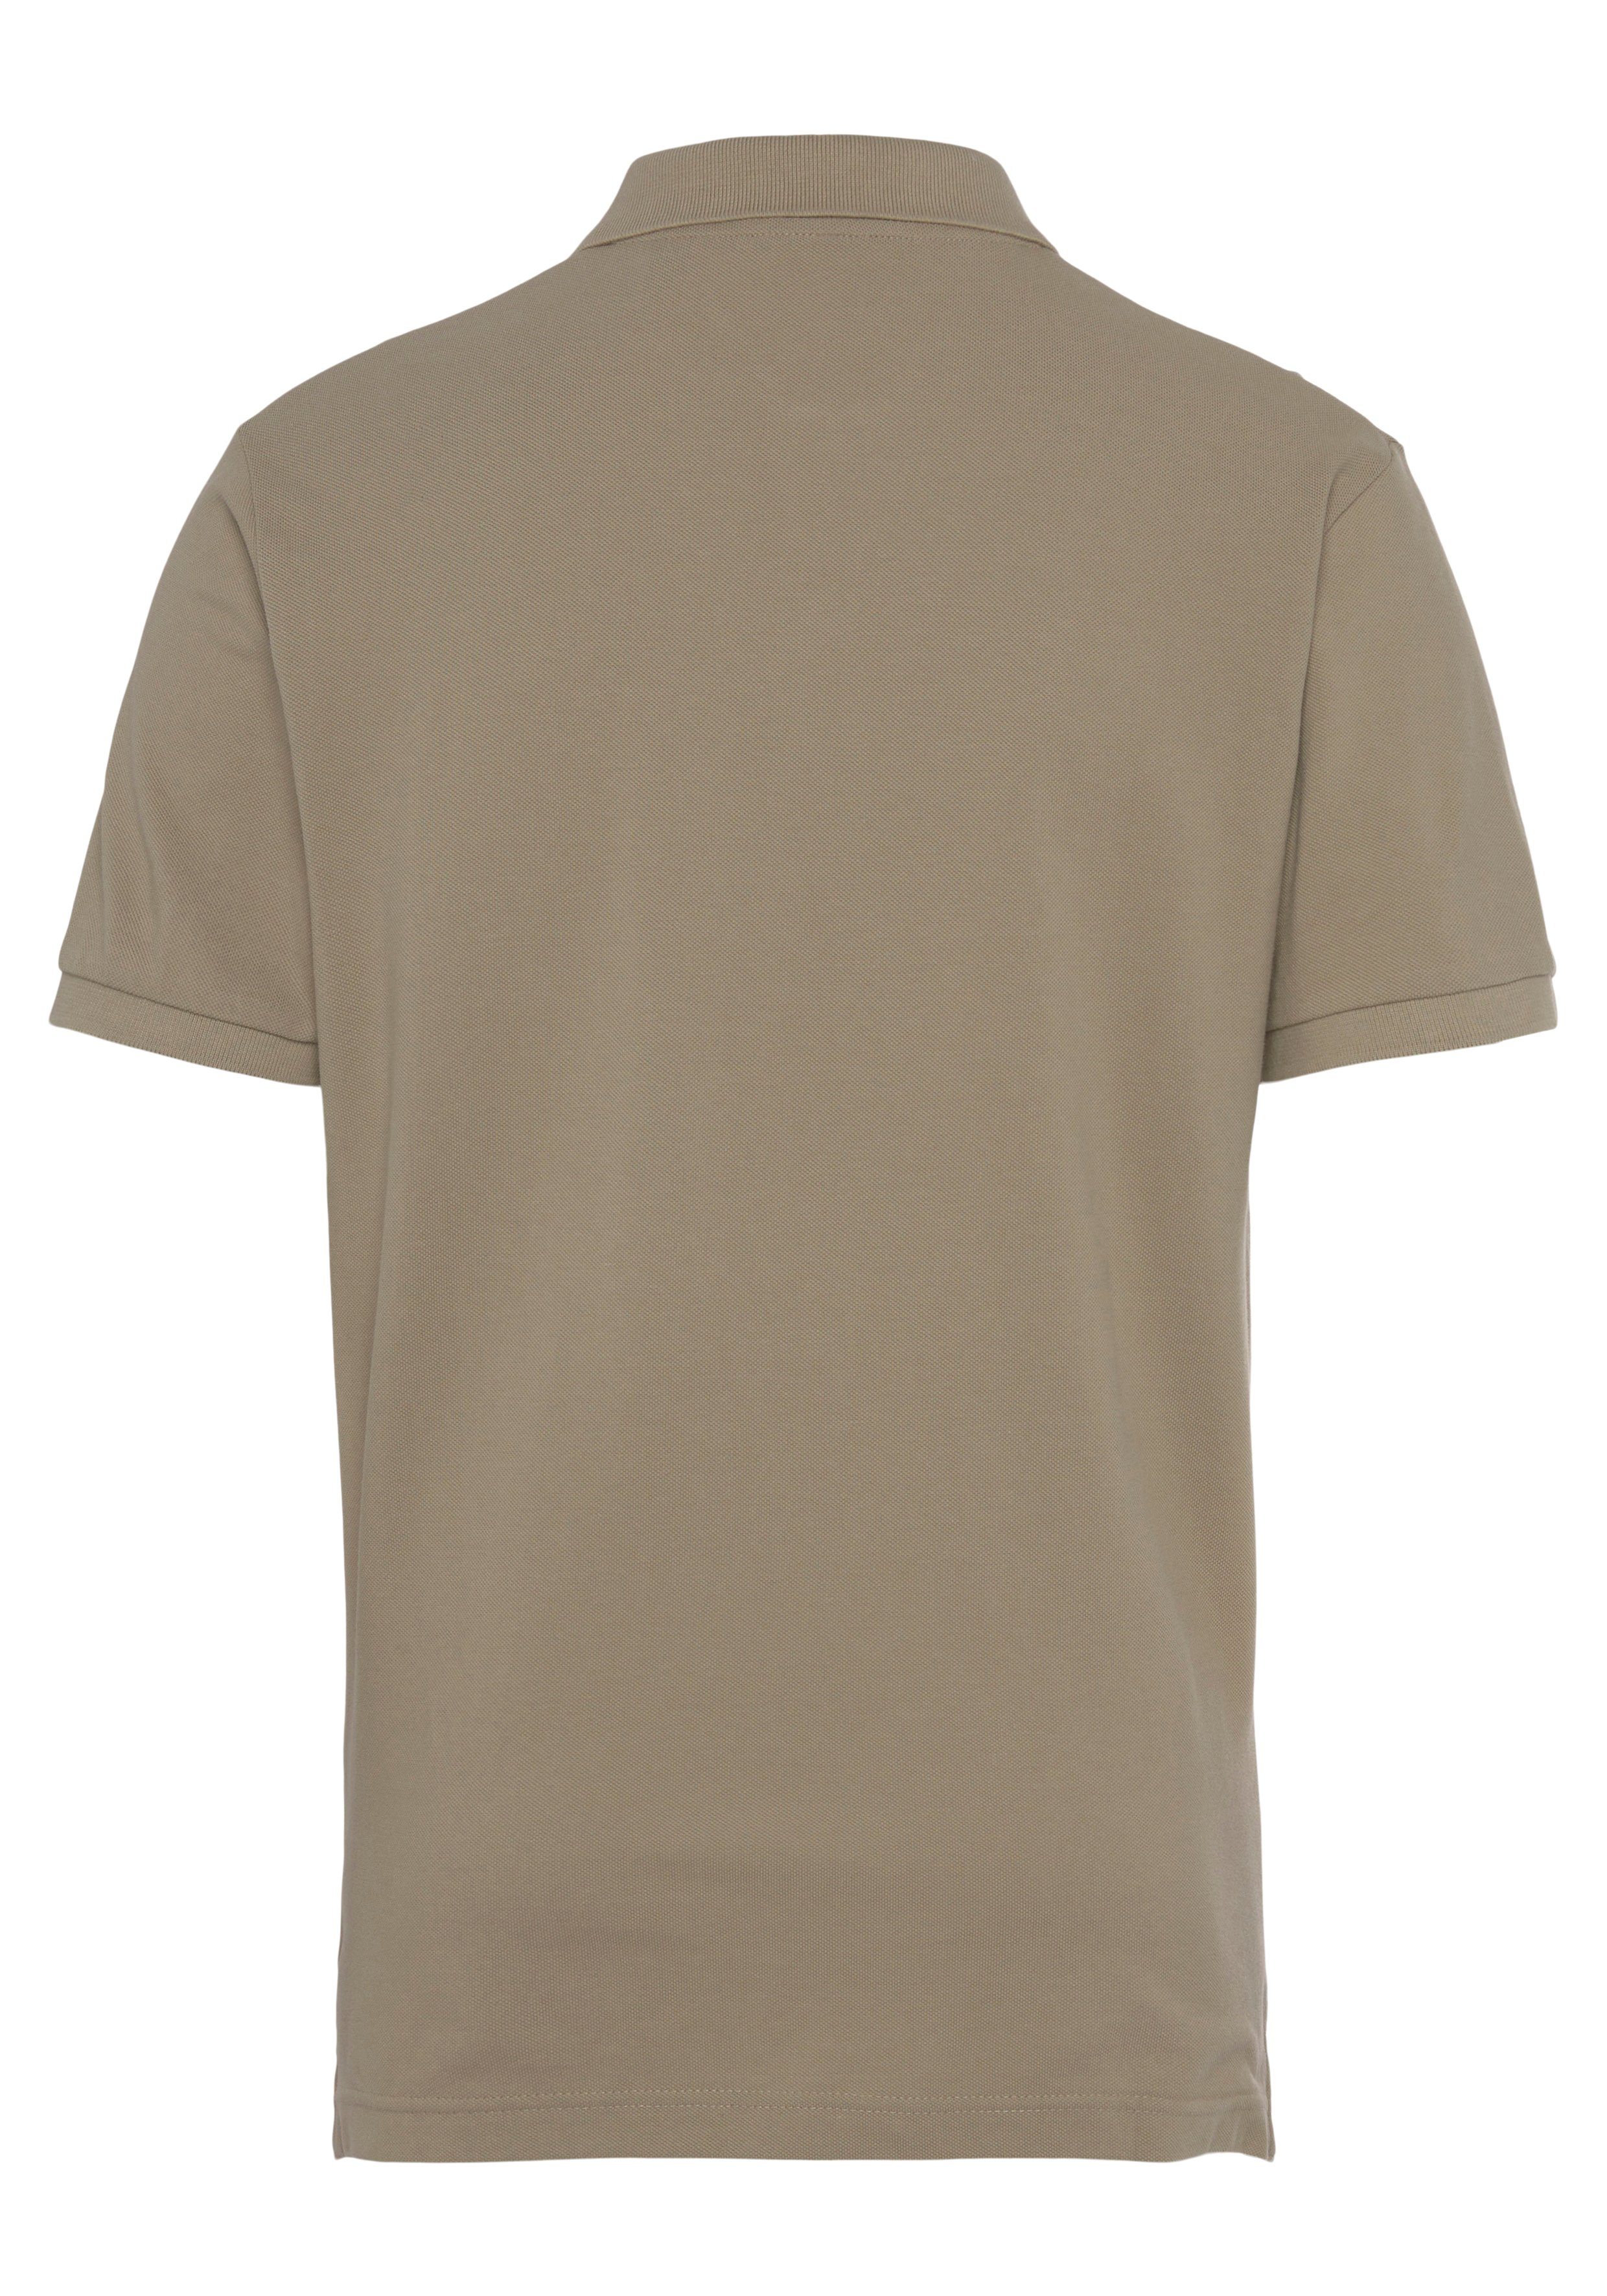 Fit, Shirt, Casual, Piqué-Polo Smart Gant KA PIQUE Premium MD. RUGGER conc.beige Qualität Poloshirt Regular